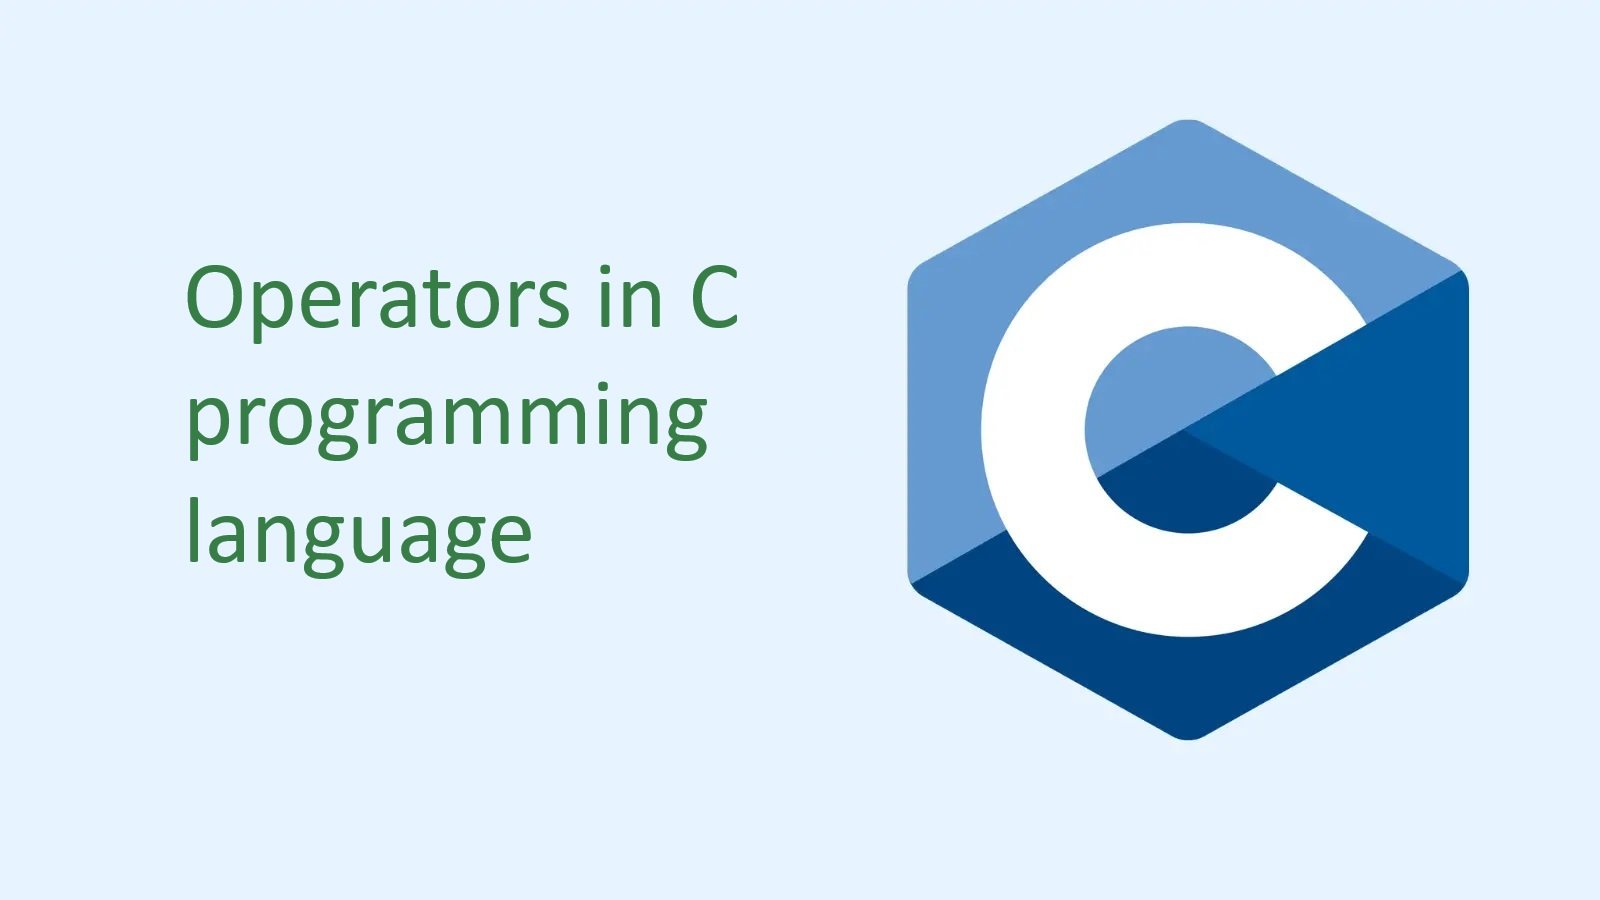 Operators in C programming language